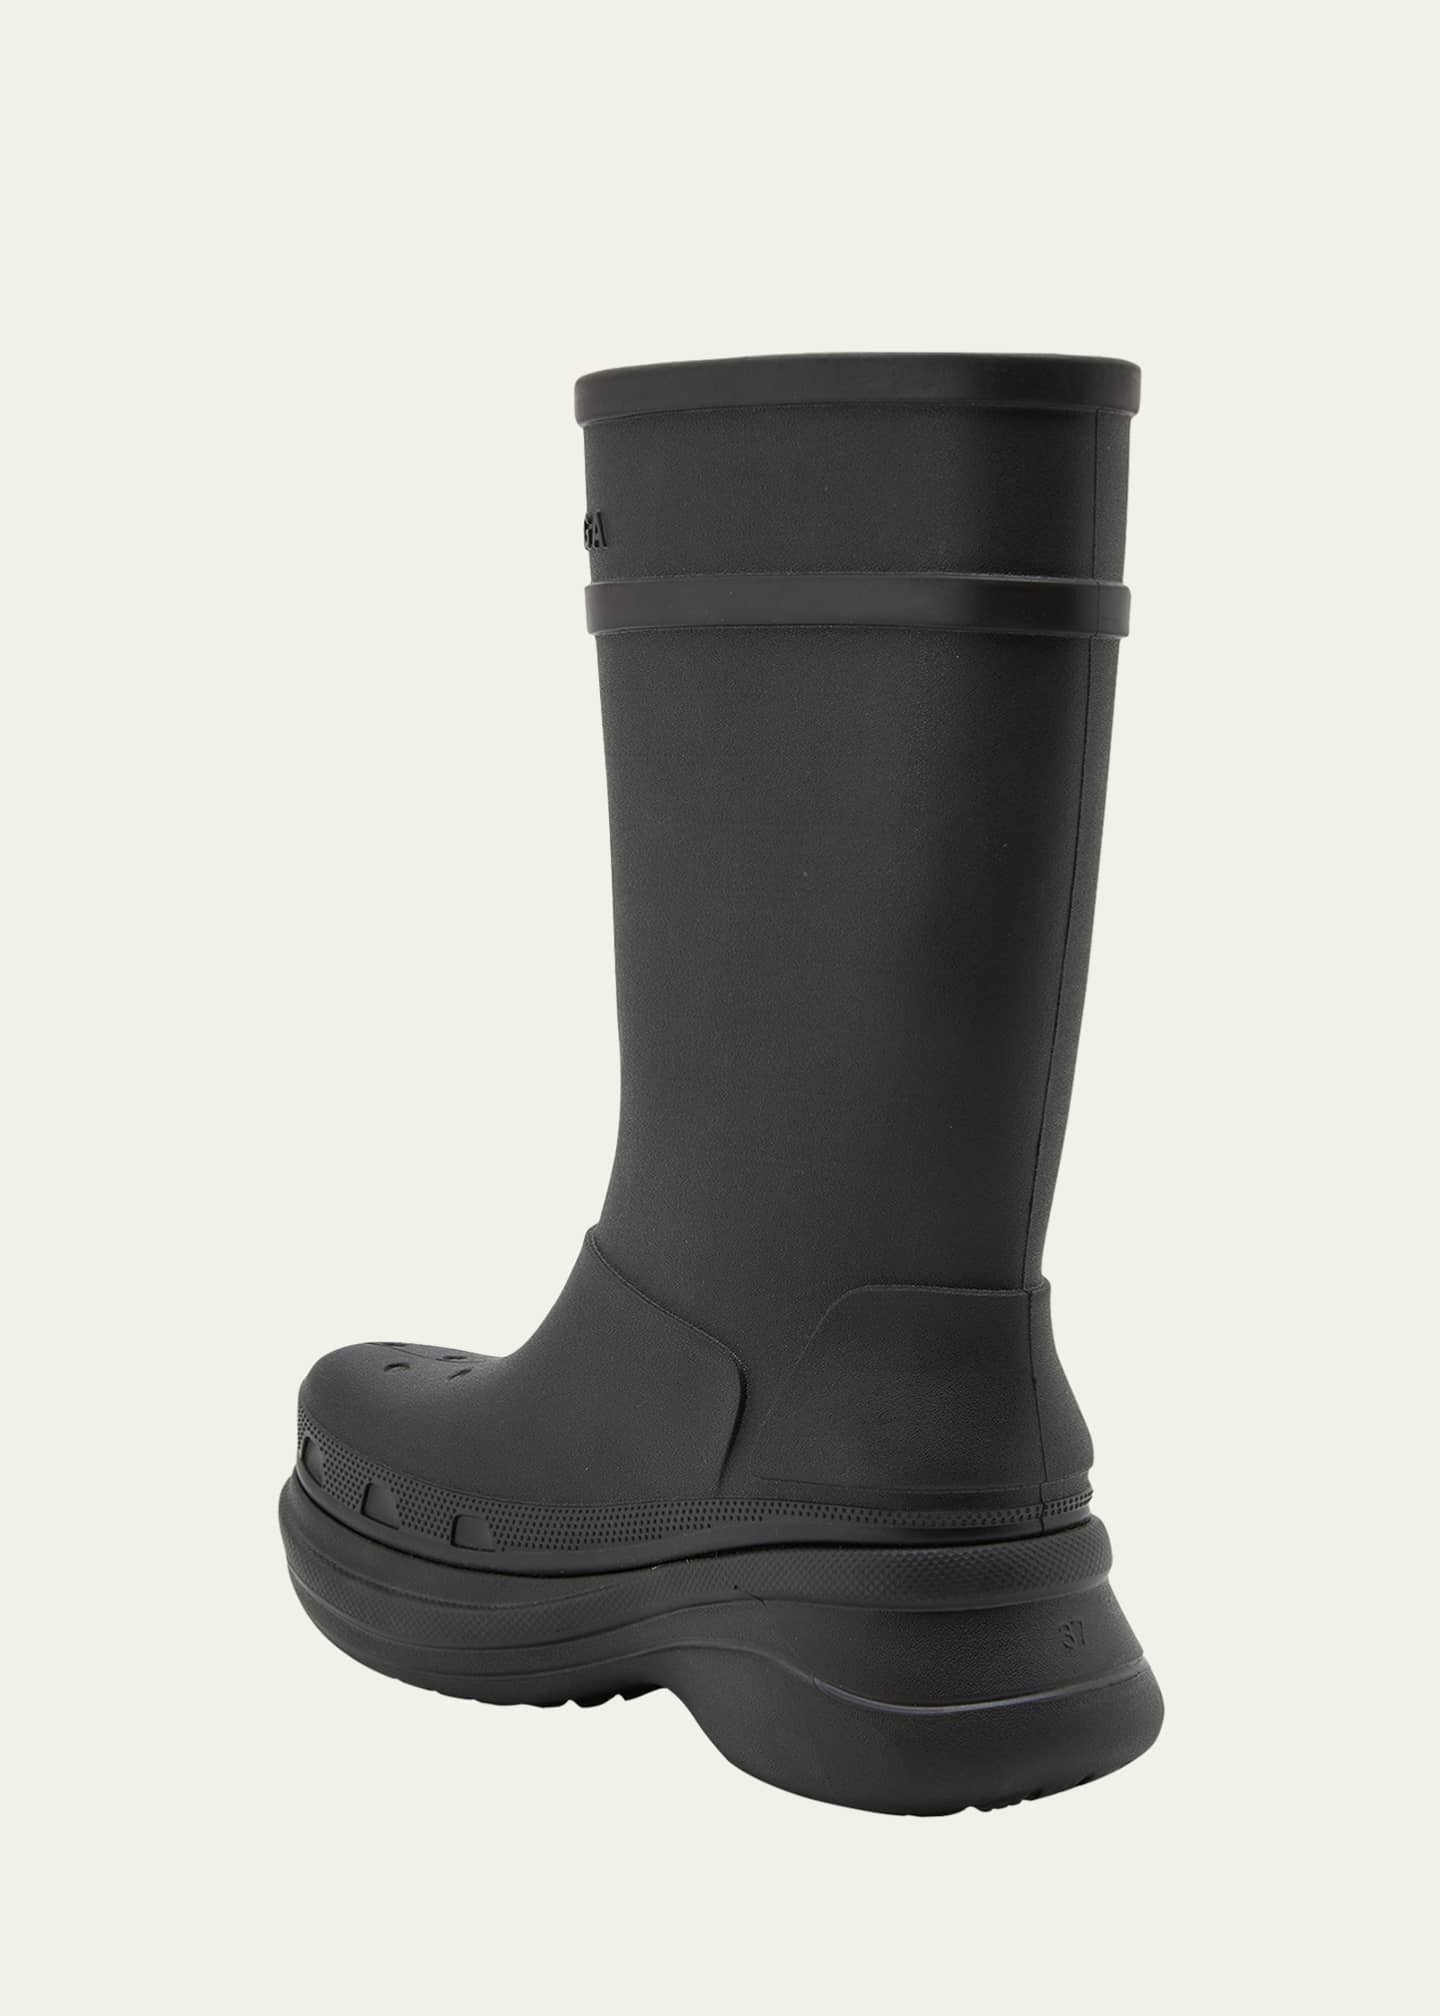 Balenciaga x Croc Rubber Rain Boots - Bergdorf Goodman